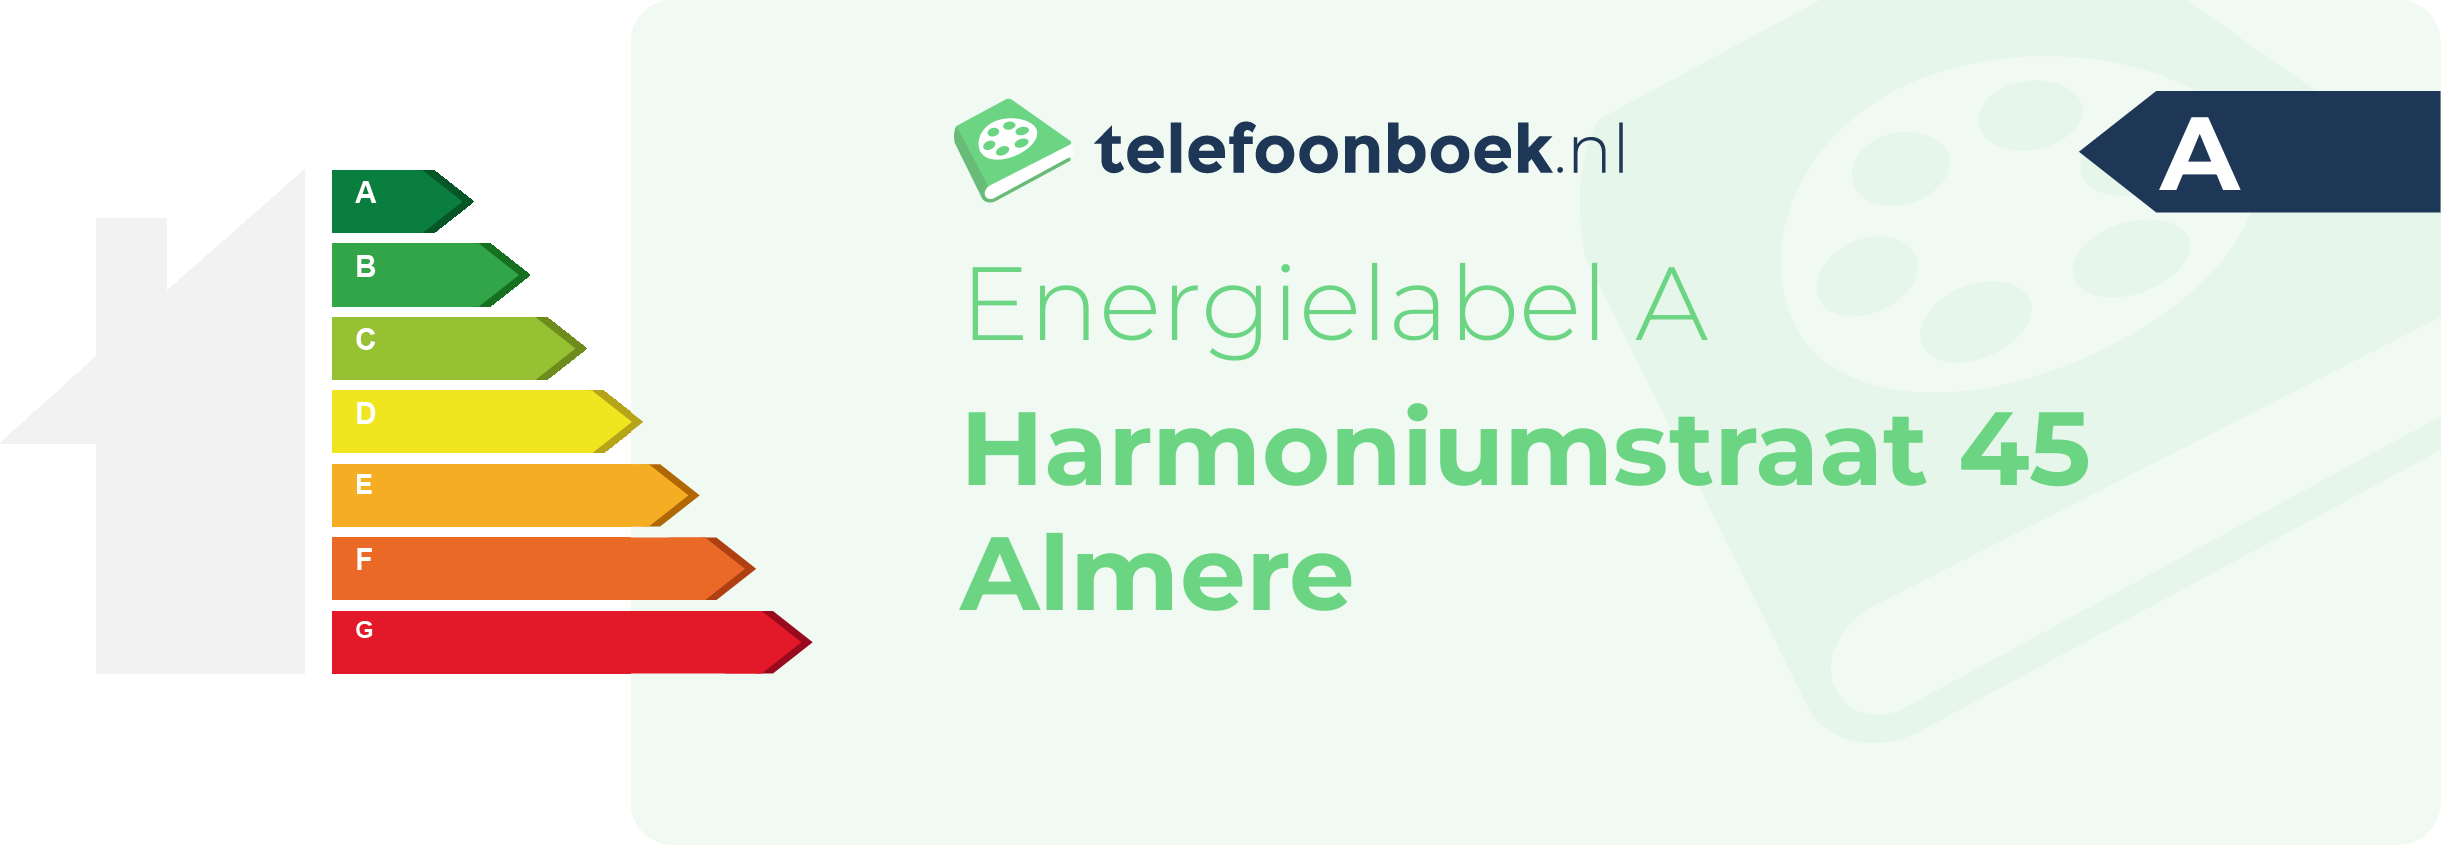 Energielabel Harmoniumstraat 45 Almere